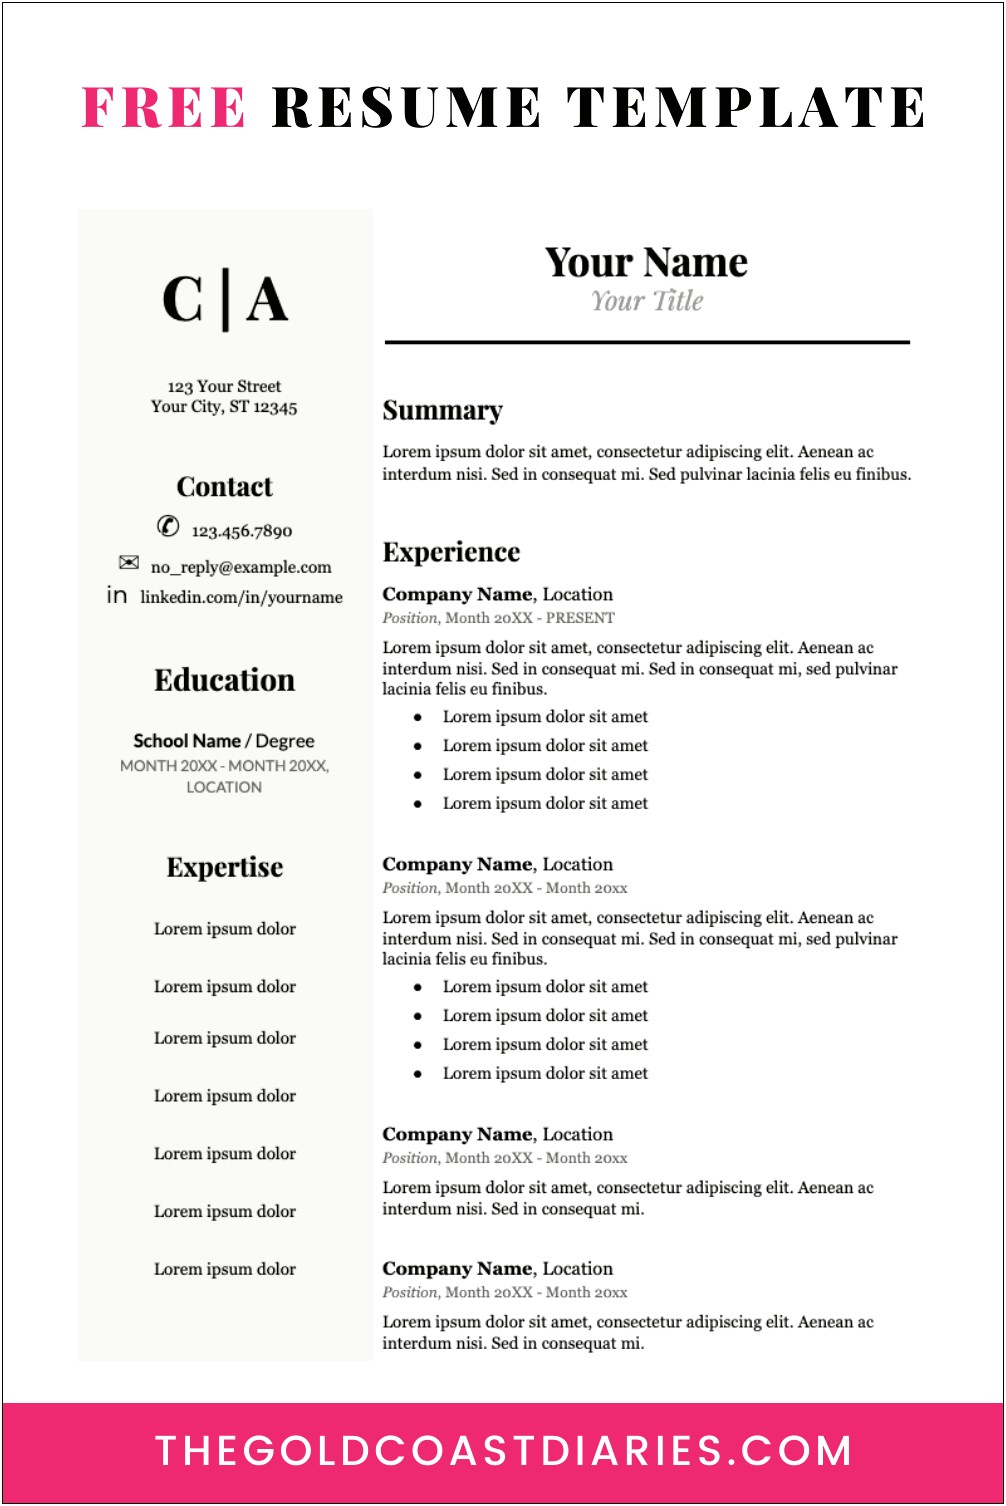 Help To Make A Good Resume